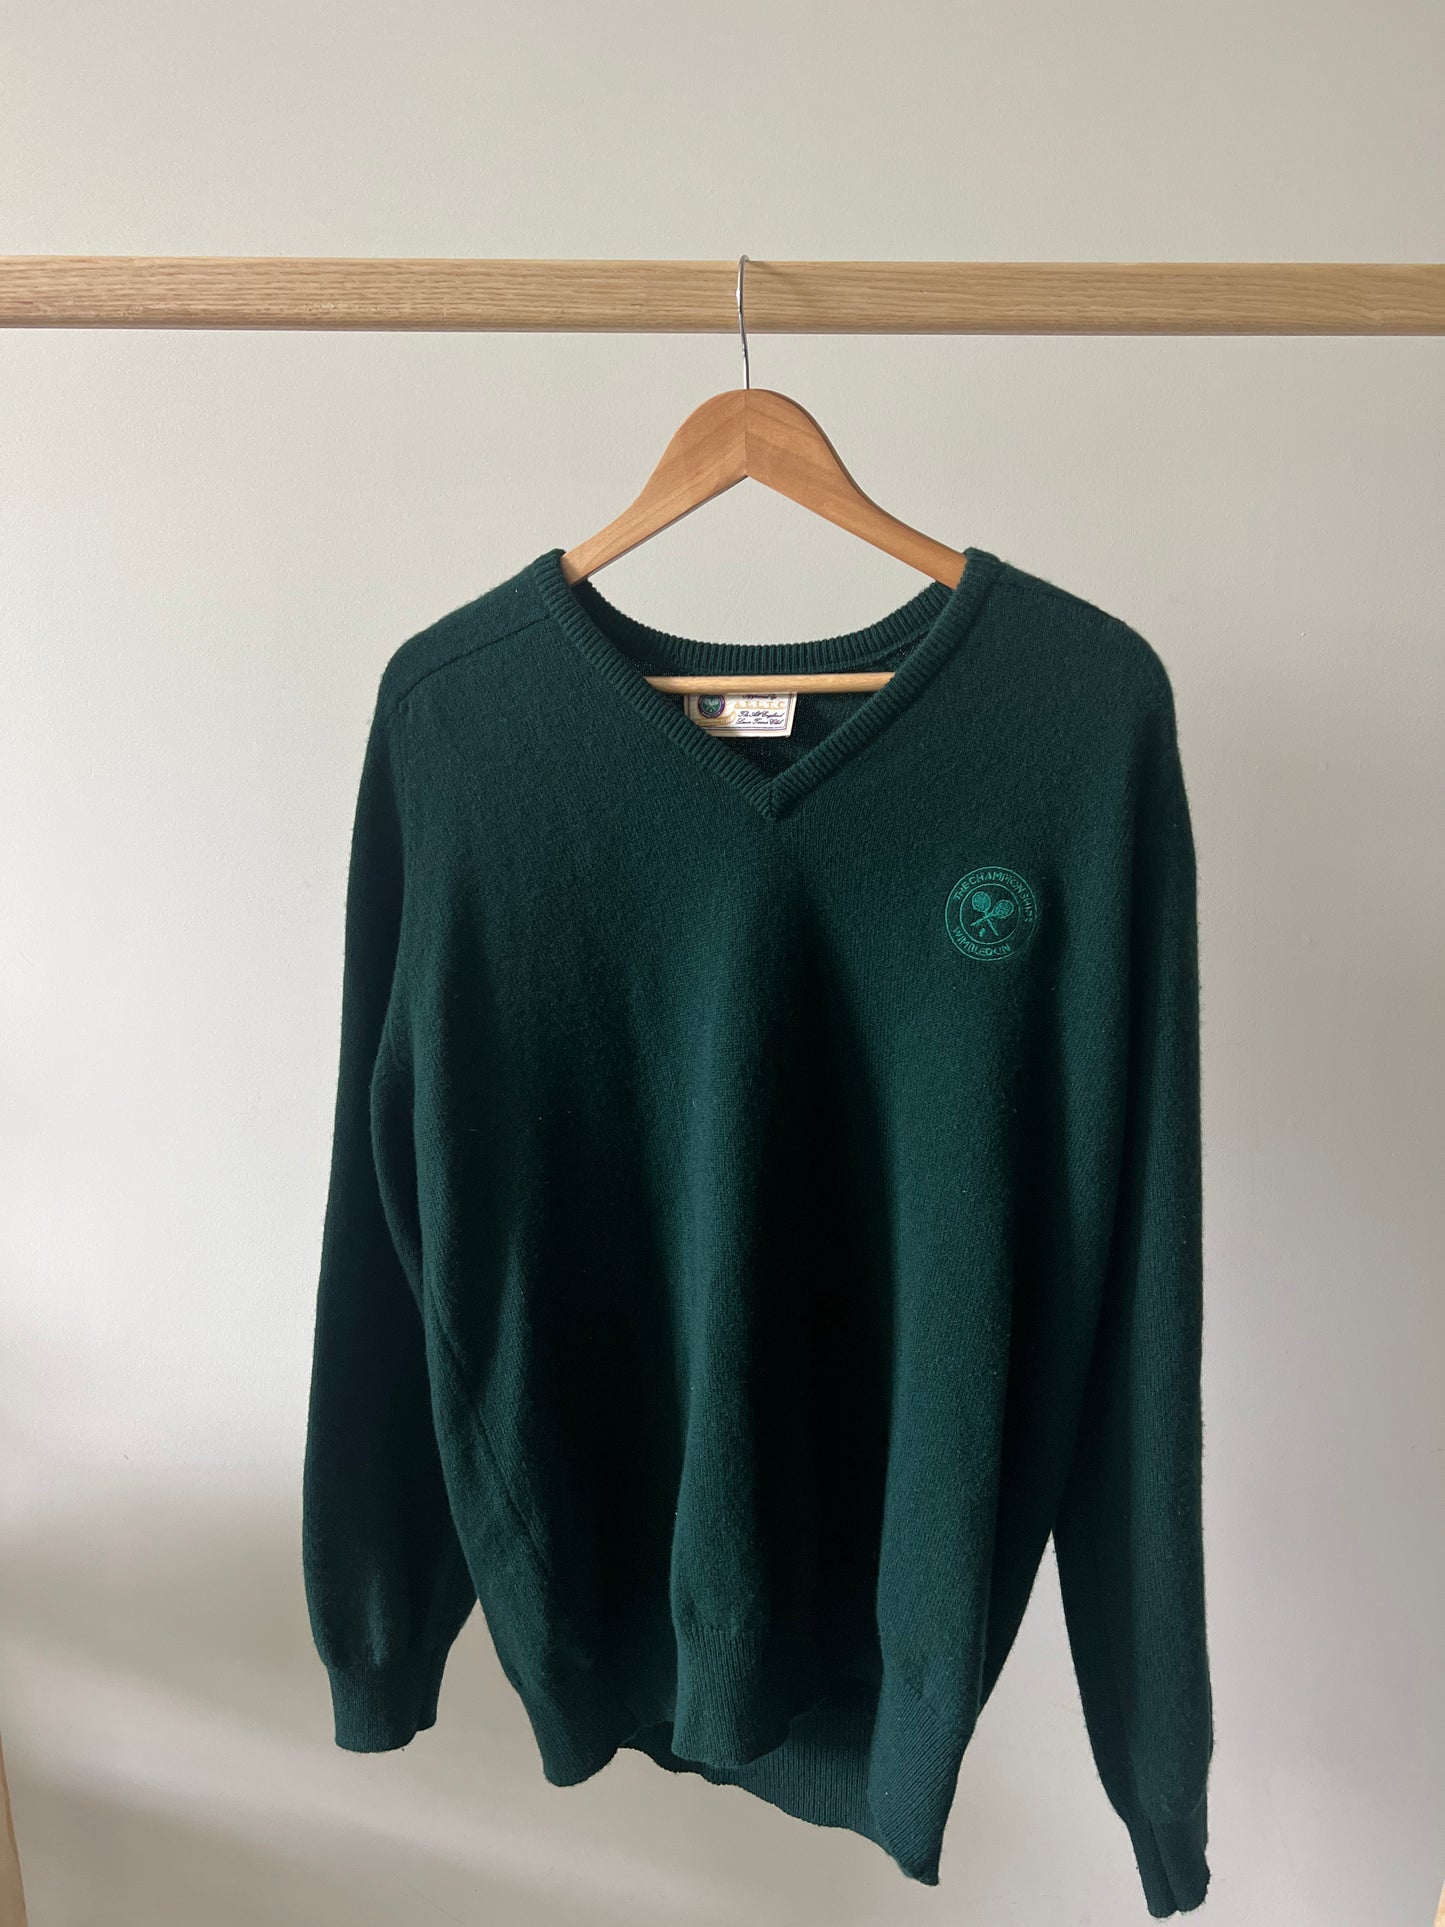 Vintage Wool Wimbledon Sweater (circa 1990s)